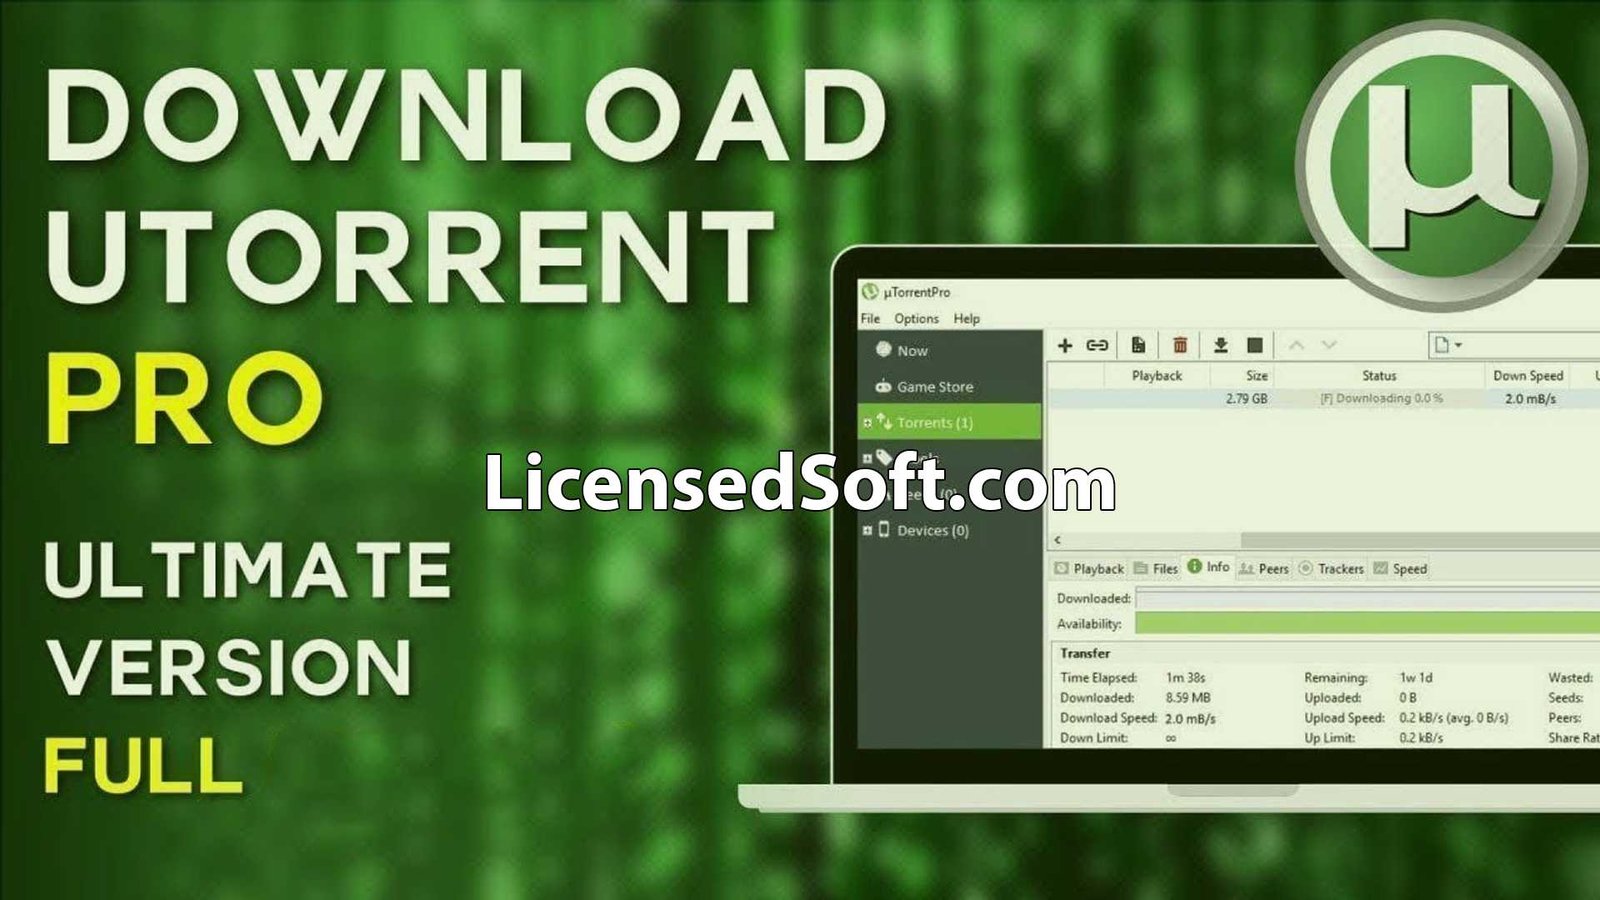 uTorrent Pro 3.5.5 2023 Full Version Cover Image By LicensedSoft